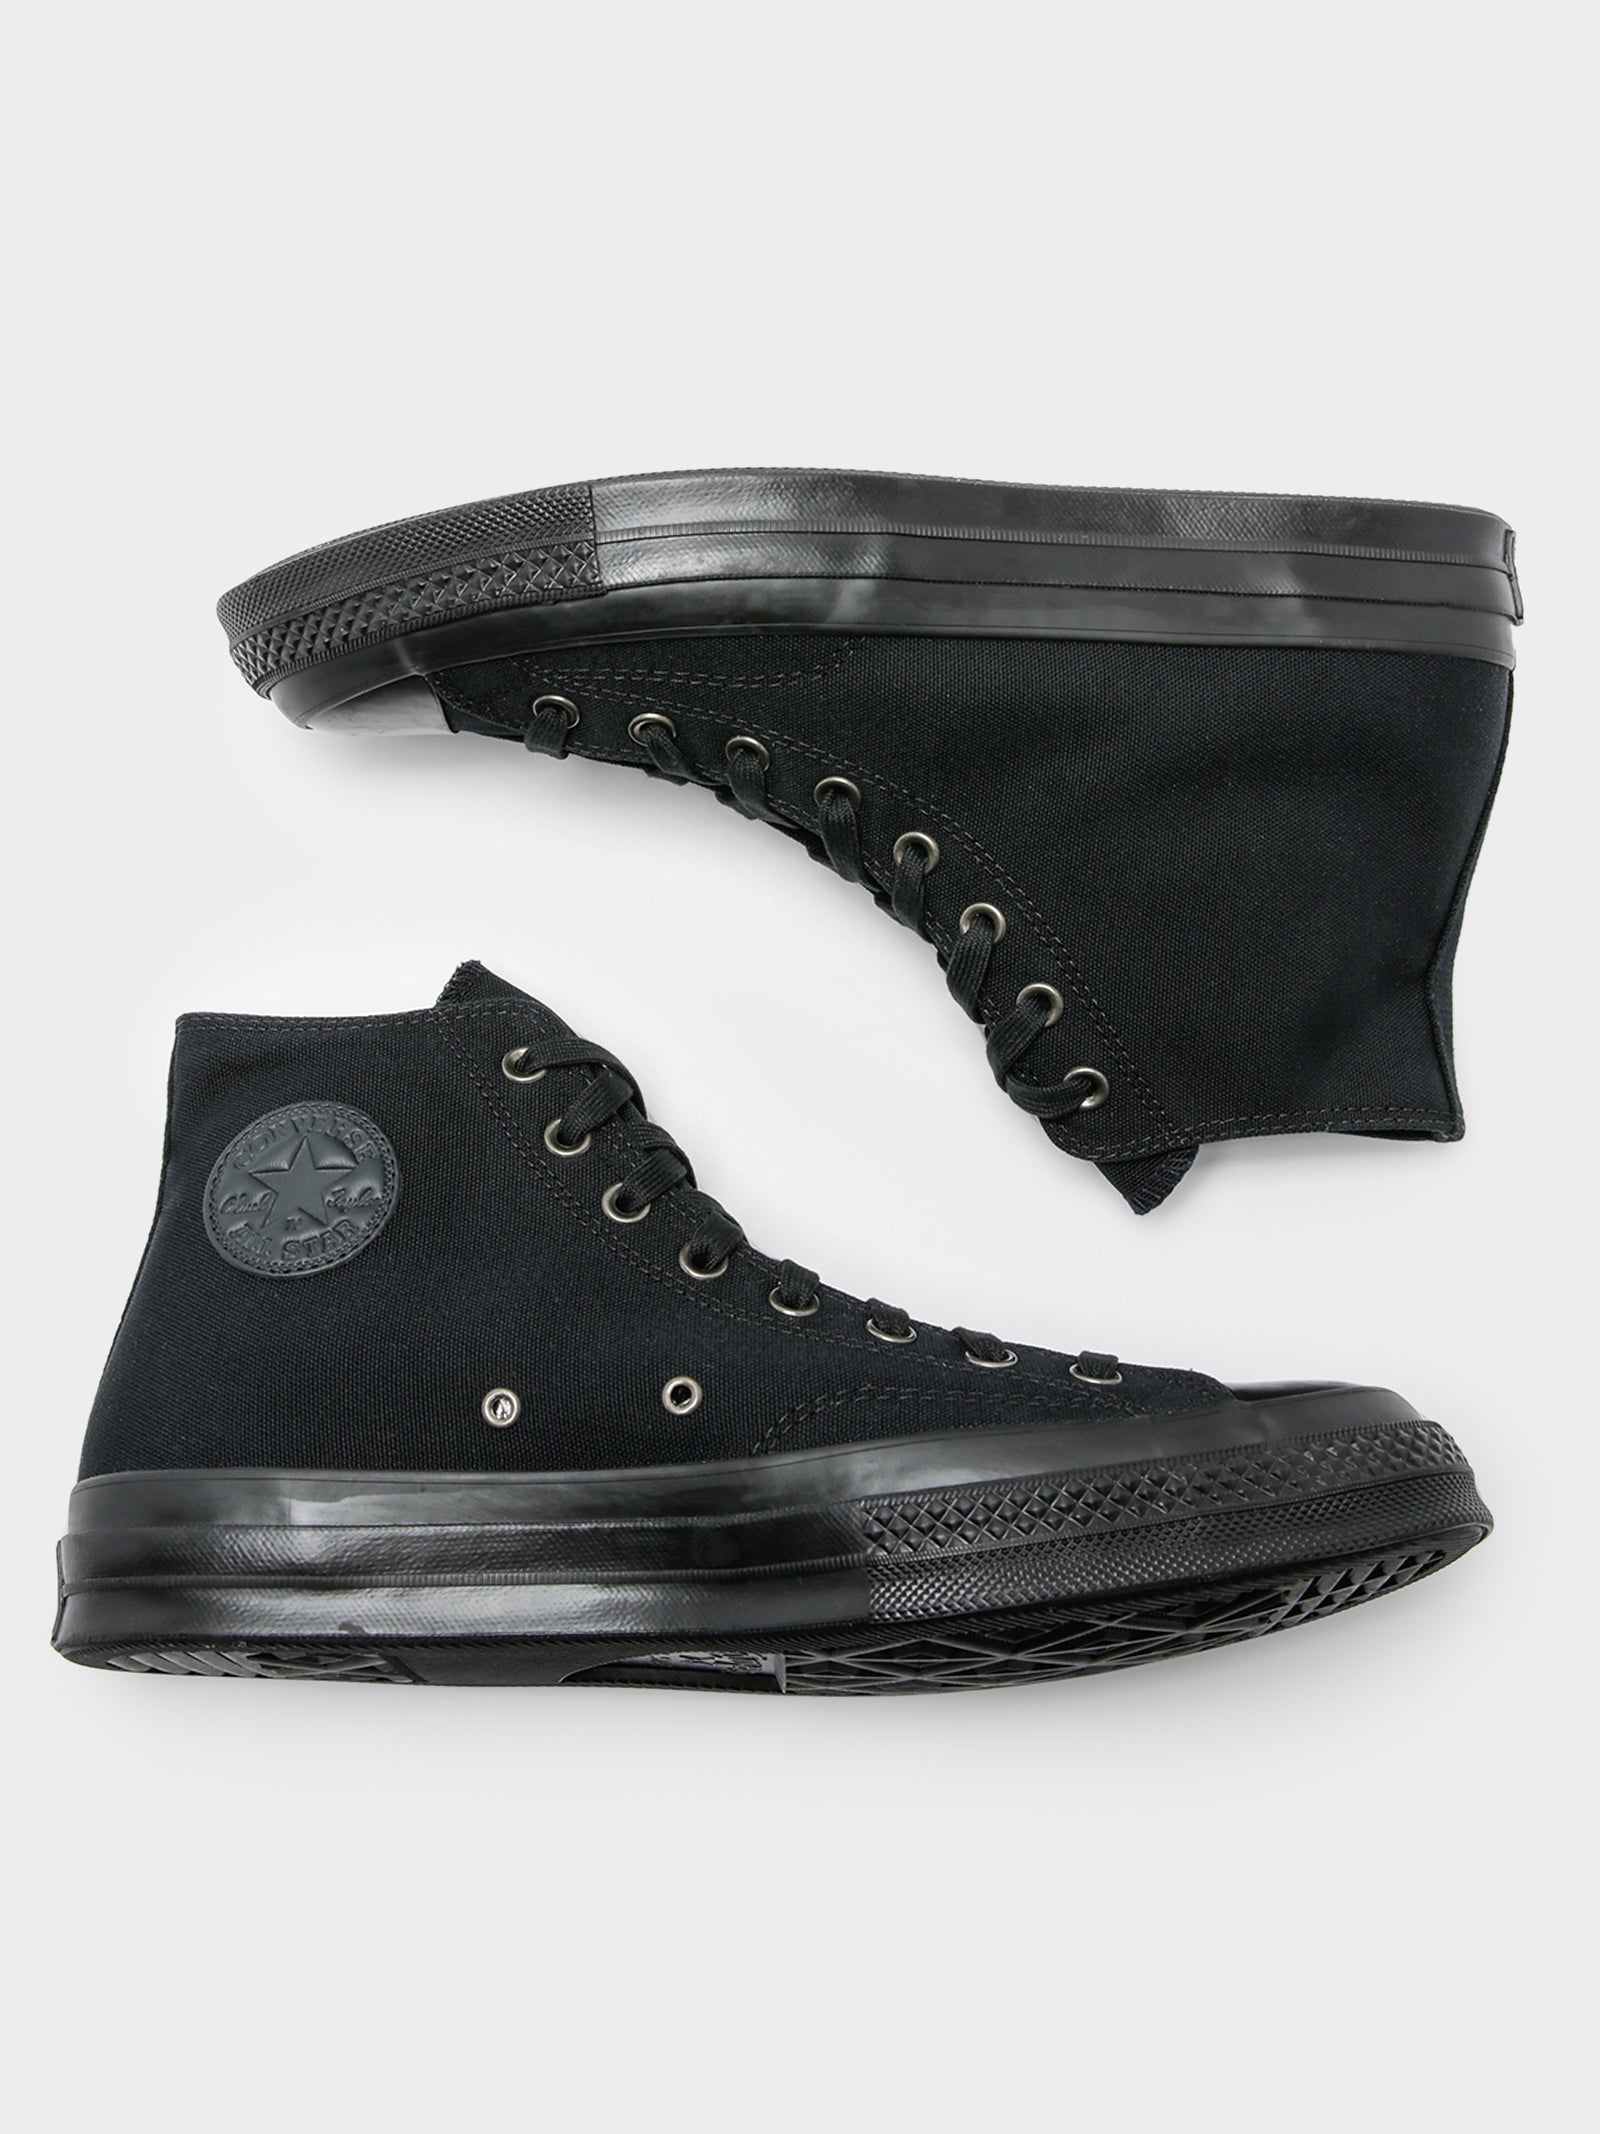 Unisex Chuck 70 High Sneakers in Vintage Black